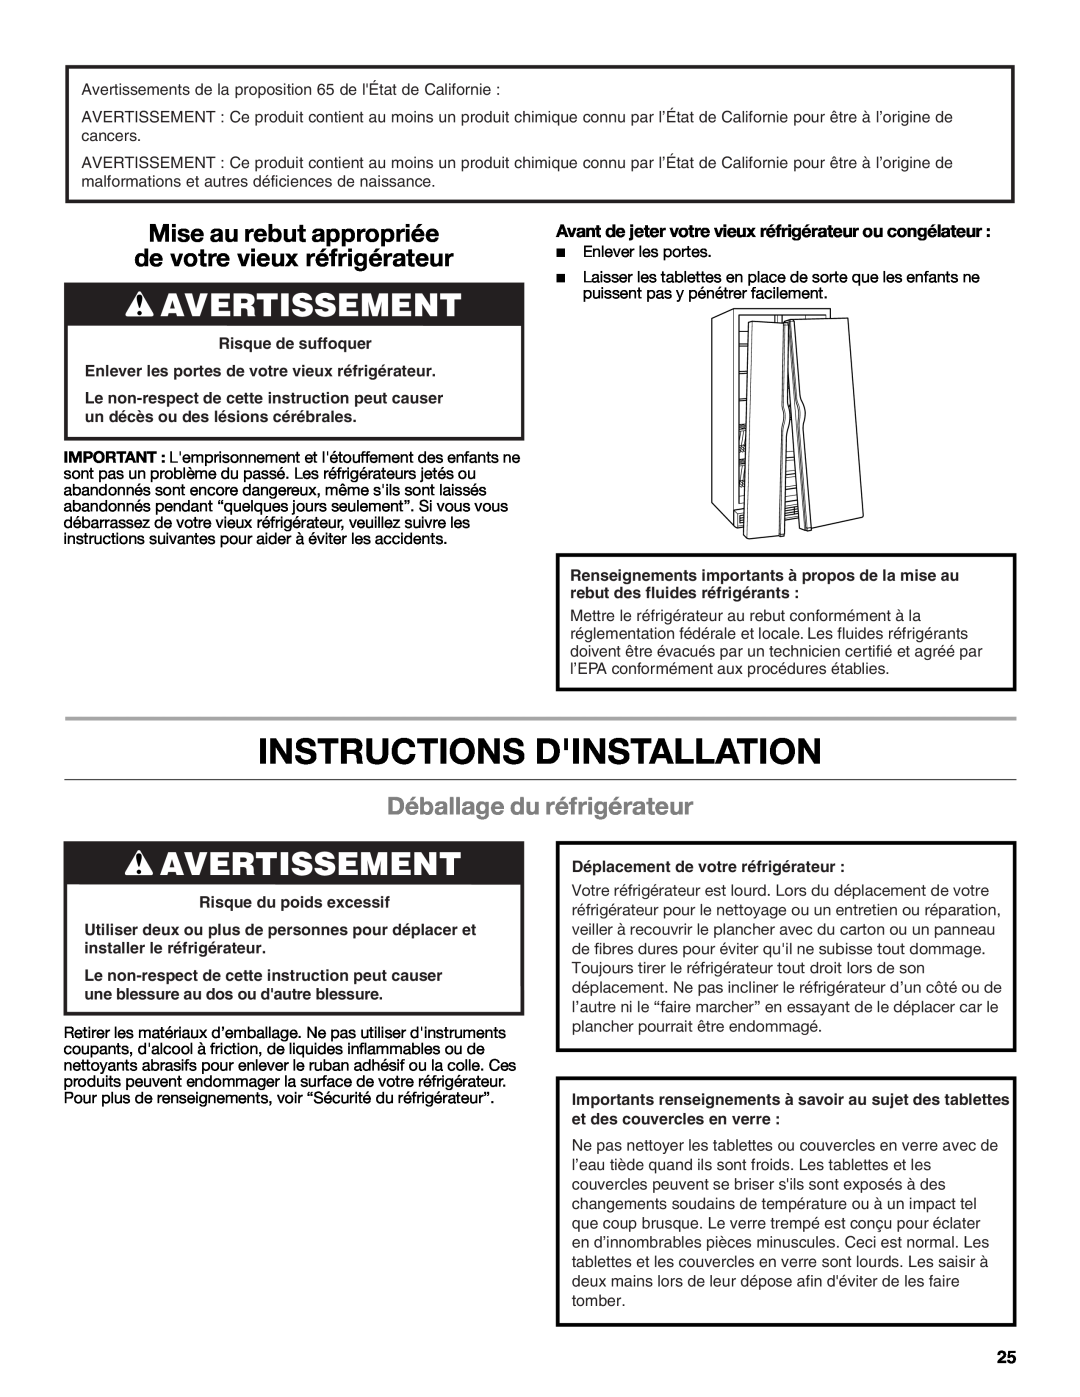 Whirlpool WRS325FNAM Instructions Dinstallation, Avertissement, Déballage du réfrigérateur, Risque du poids excessif 